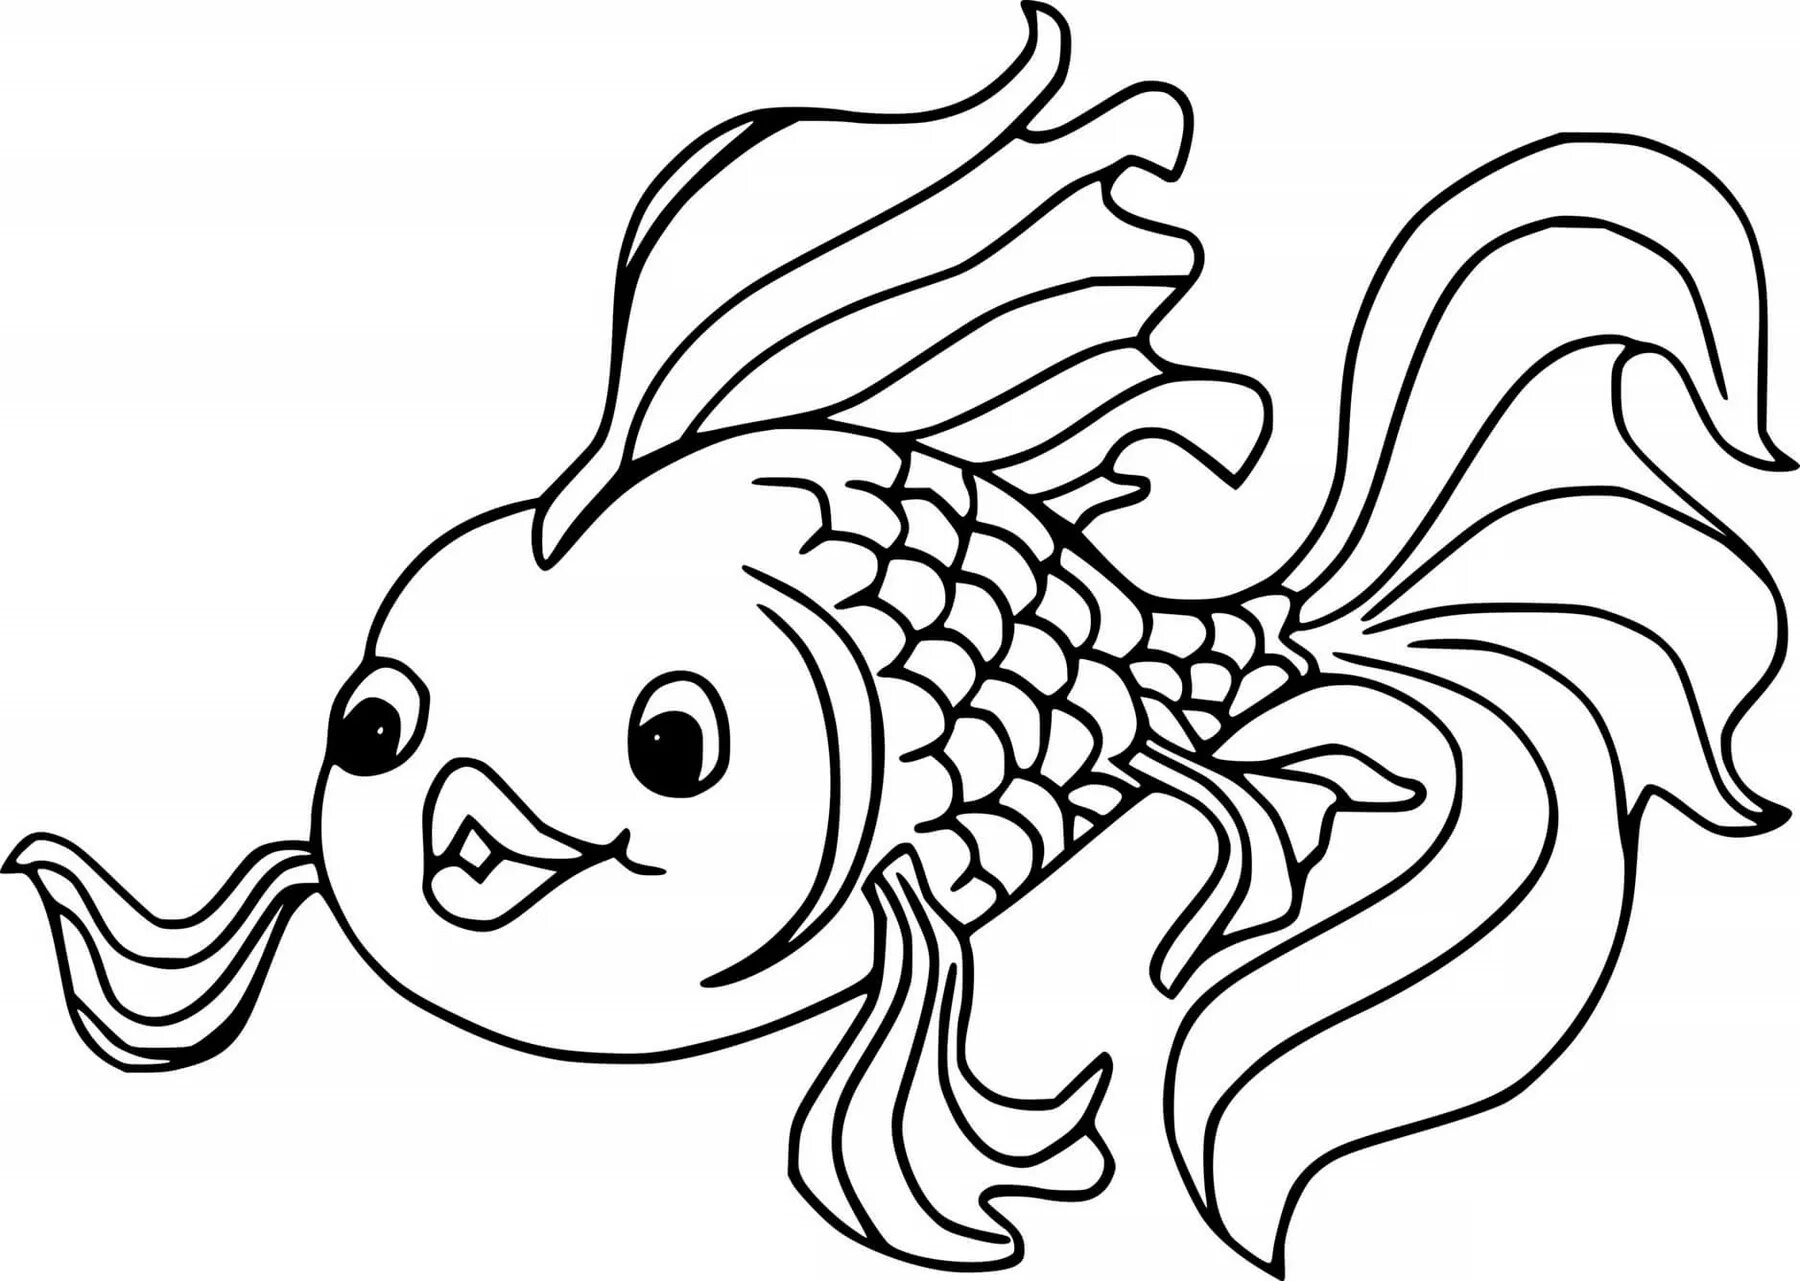 Раскраски рыбки для детей 3 4. Раскраска рыбка. Рыбка раскраска для детей. Золотая рыбка раскраска. Рыба раскраска для детей.